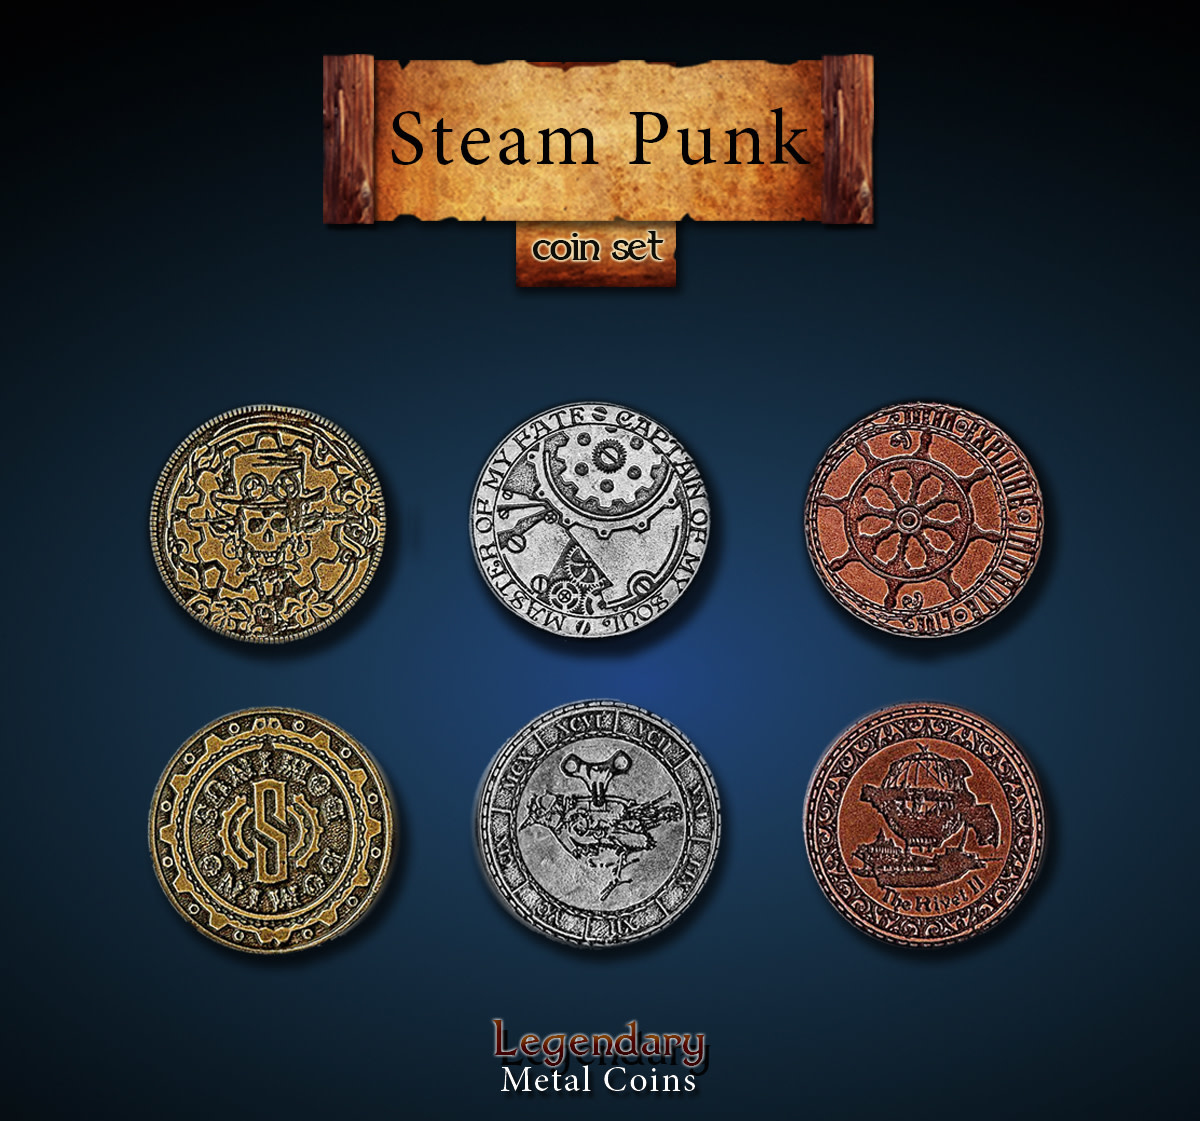 Legendary Metal Coins: Steampunk (24pcs)